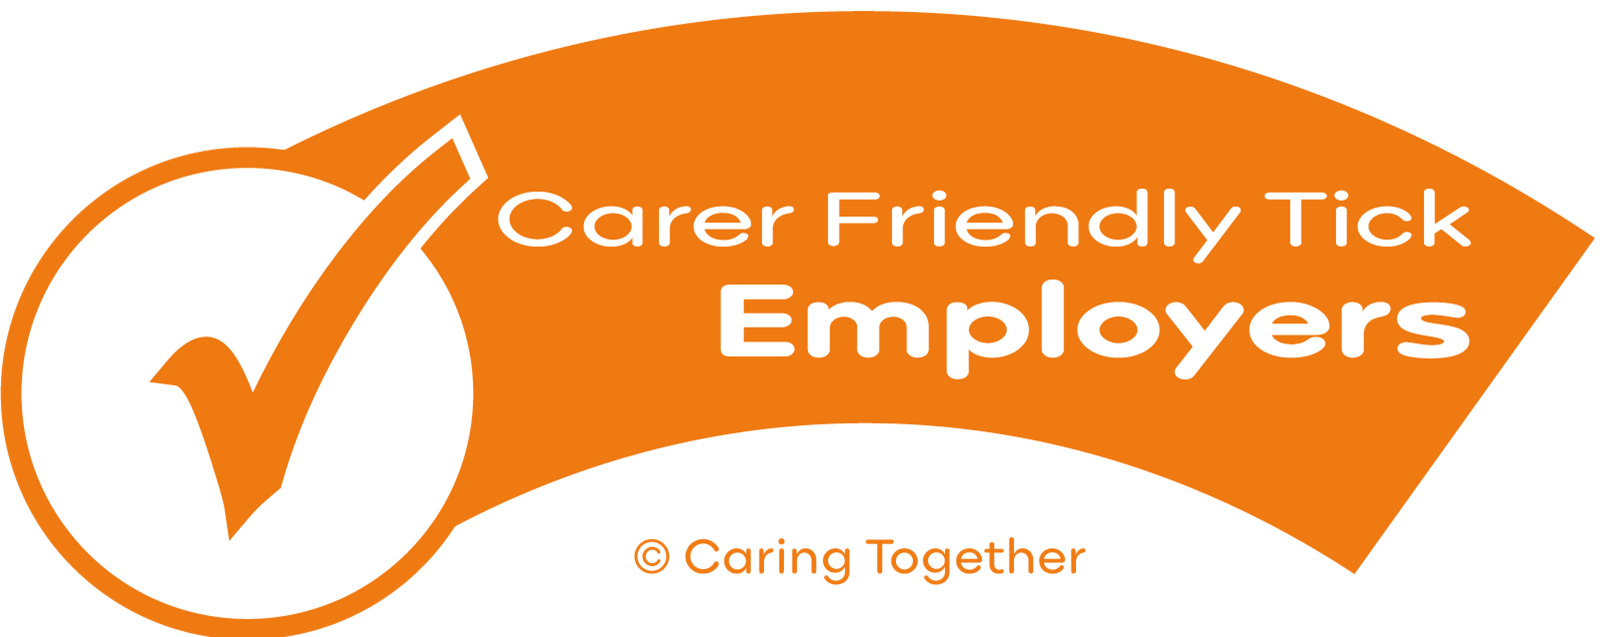 Carer Friendly Employers